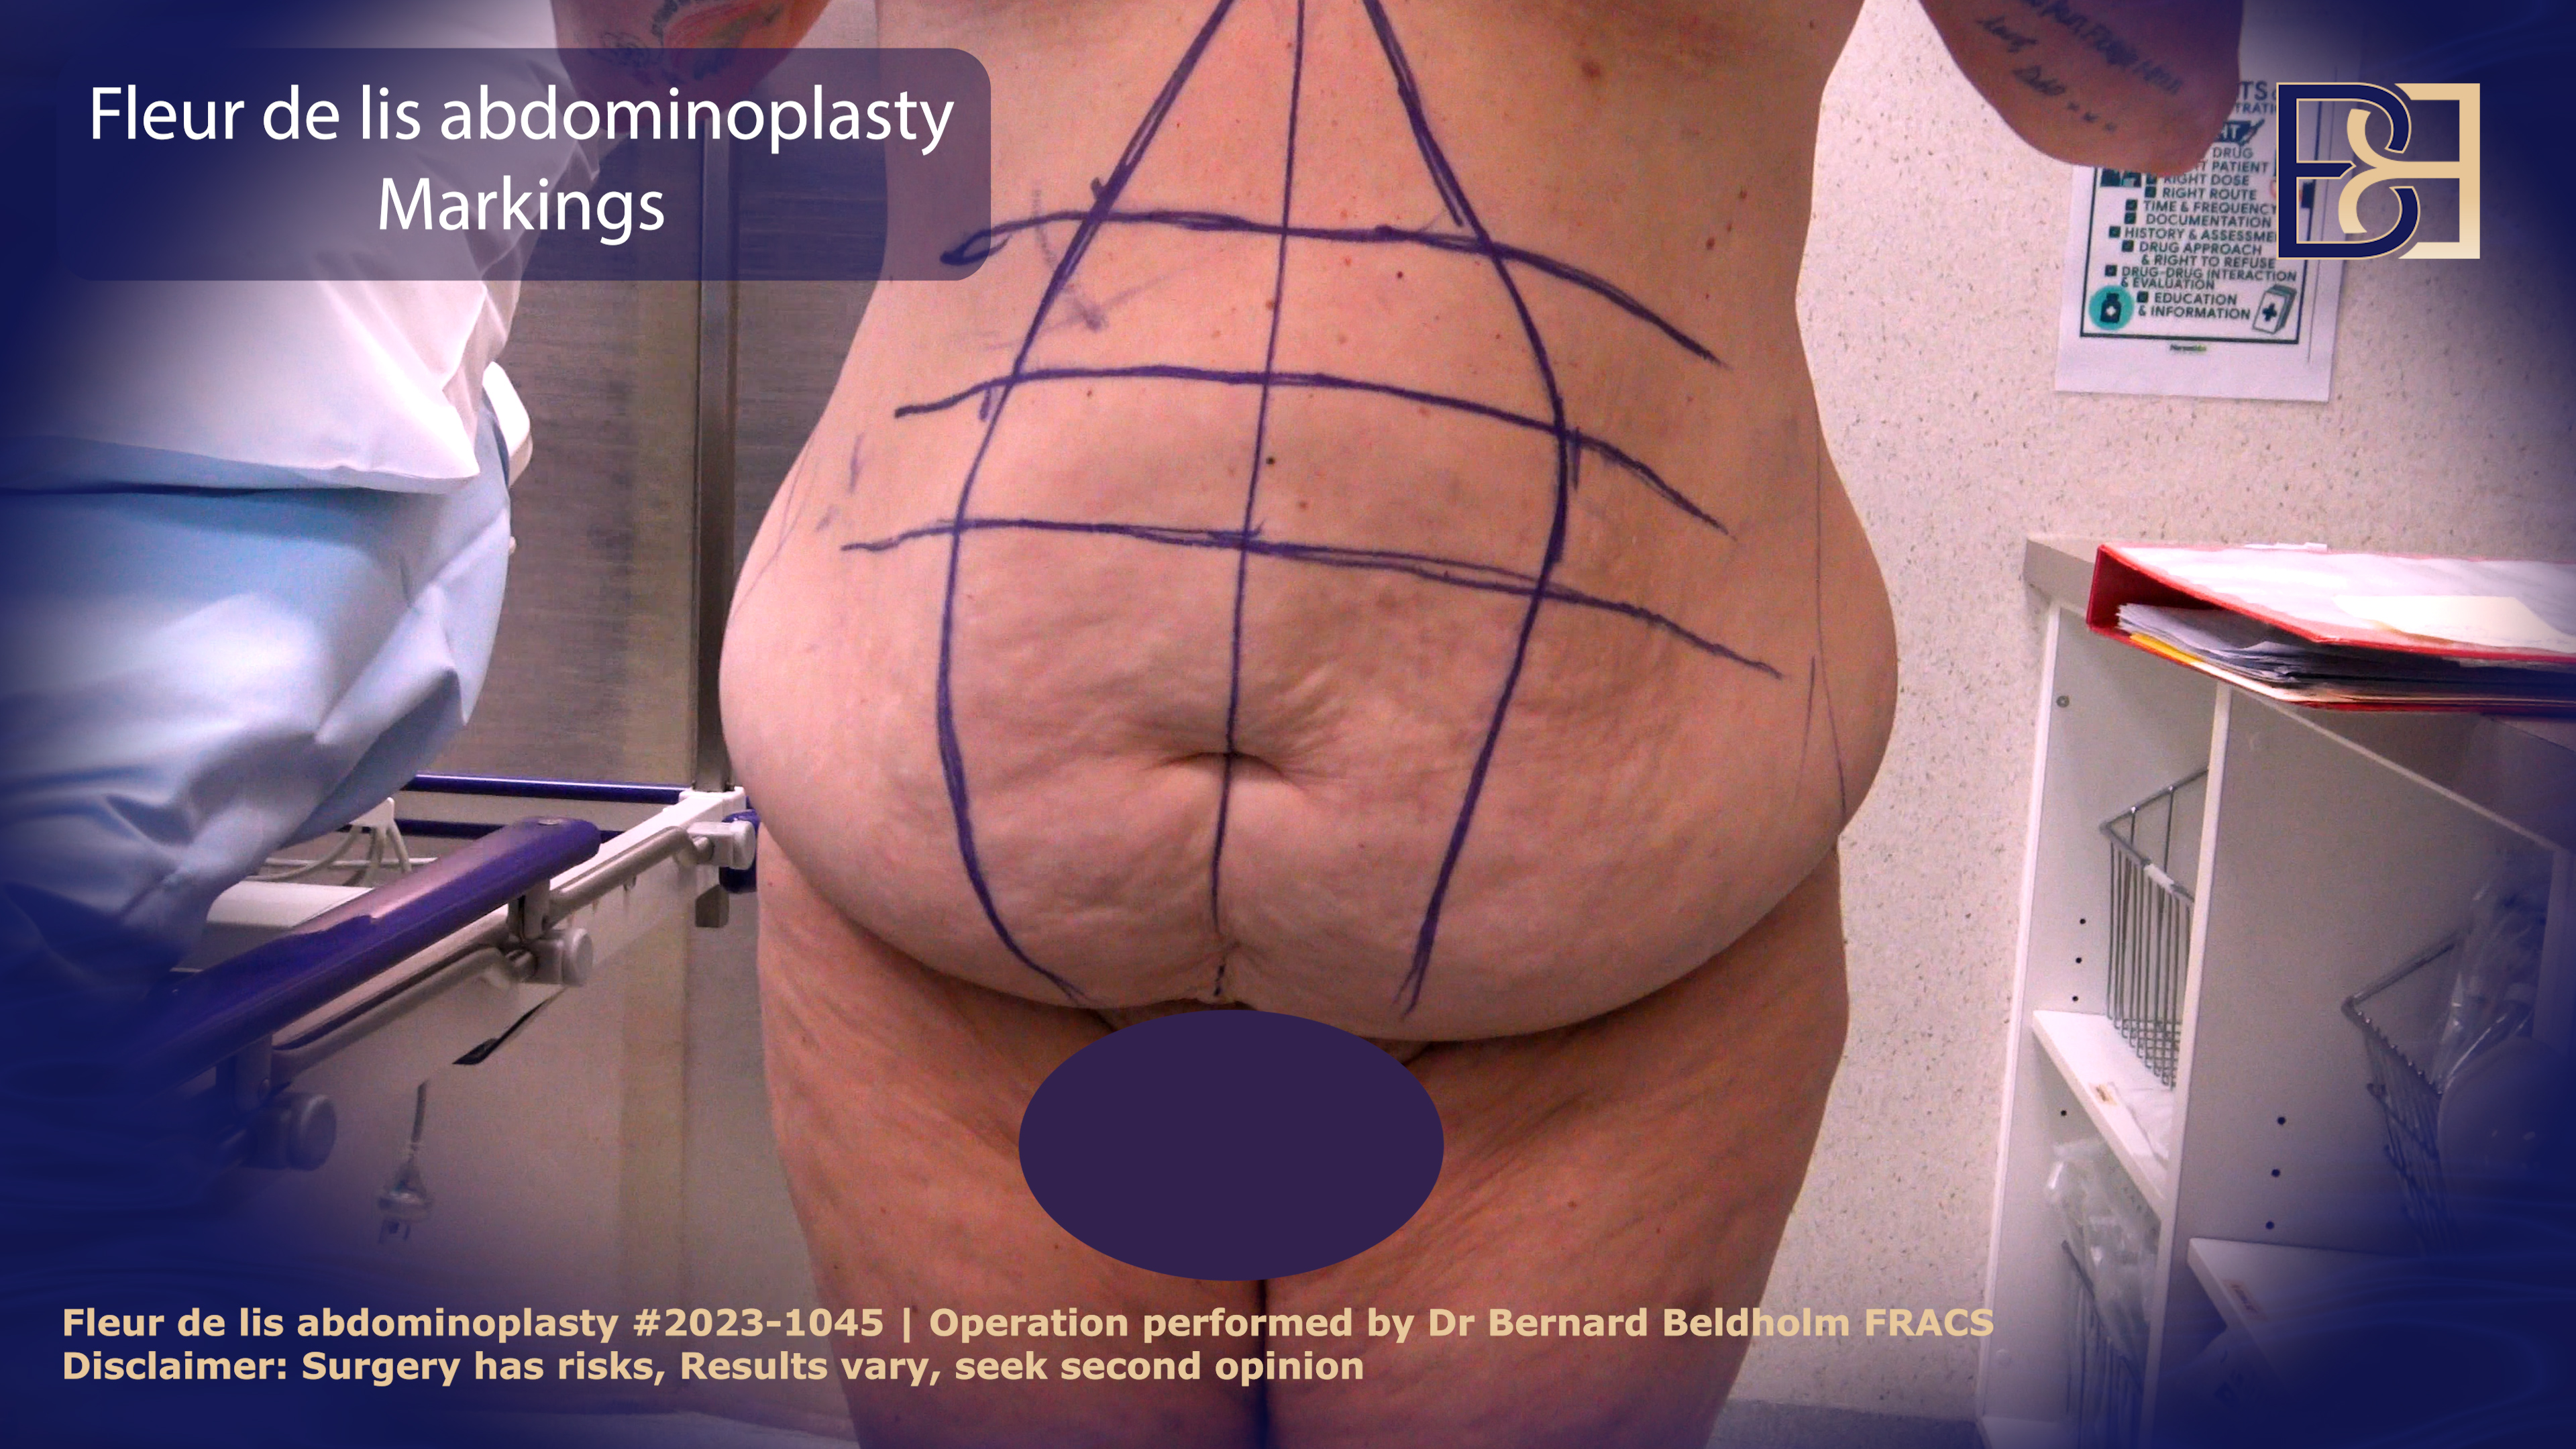 Fleur de lis abdominoplasty markings | Dr Bernard Beldholm